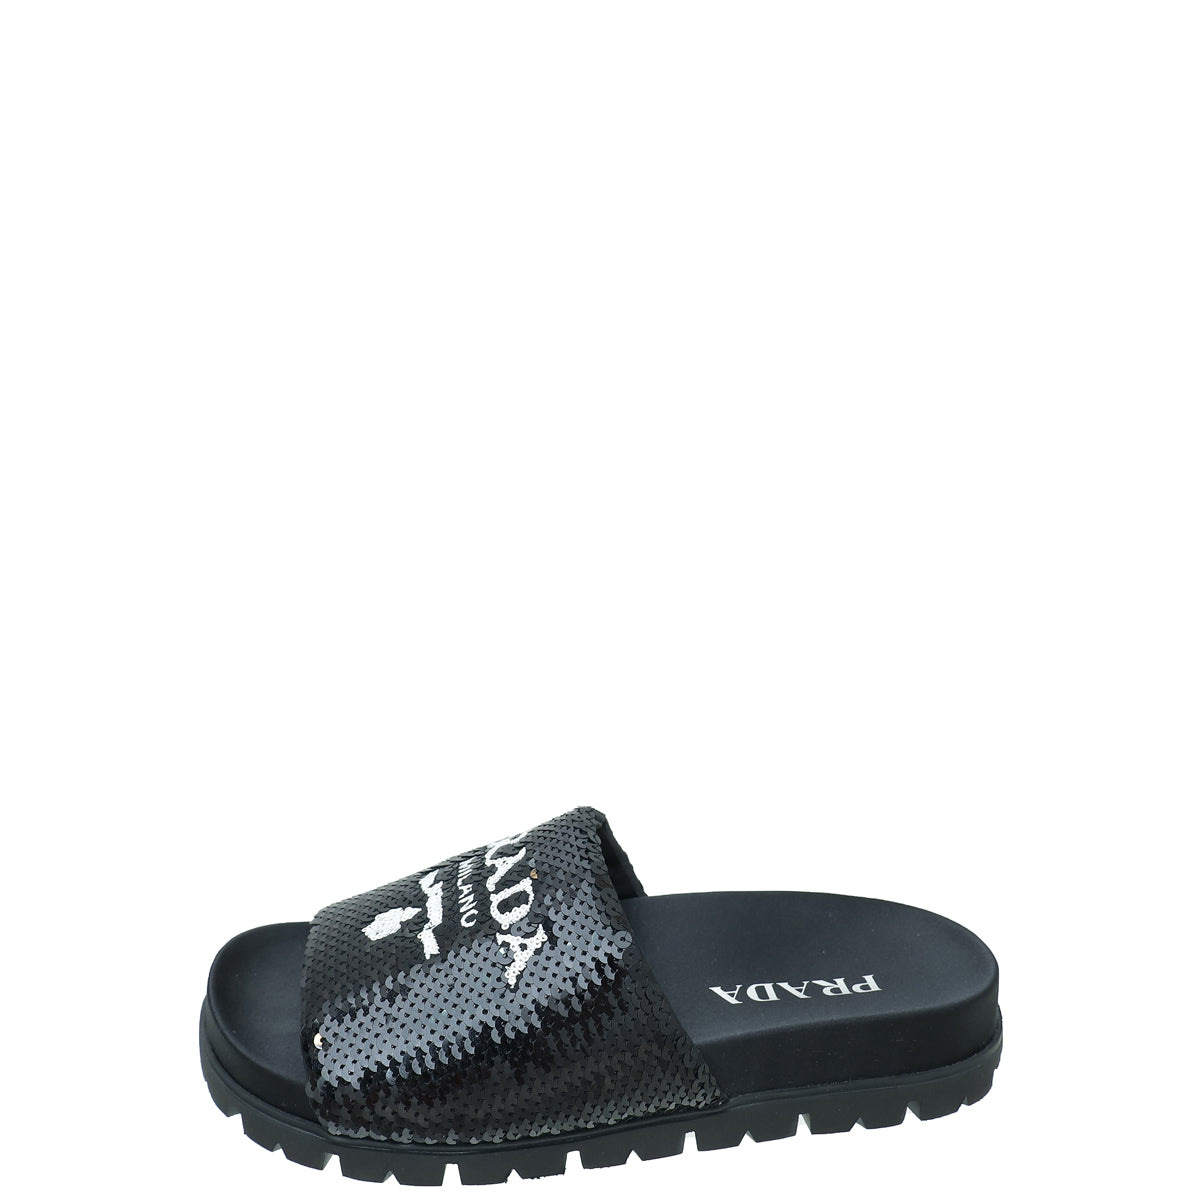 Prada Black Paillettes Sequin Logo Slide Sandals 36